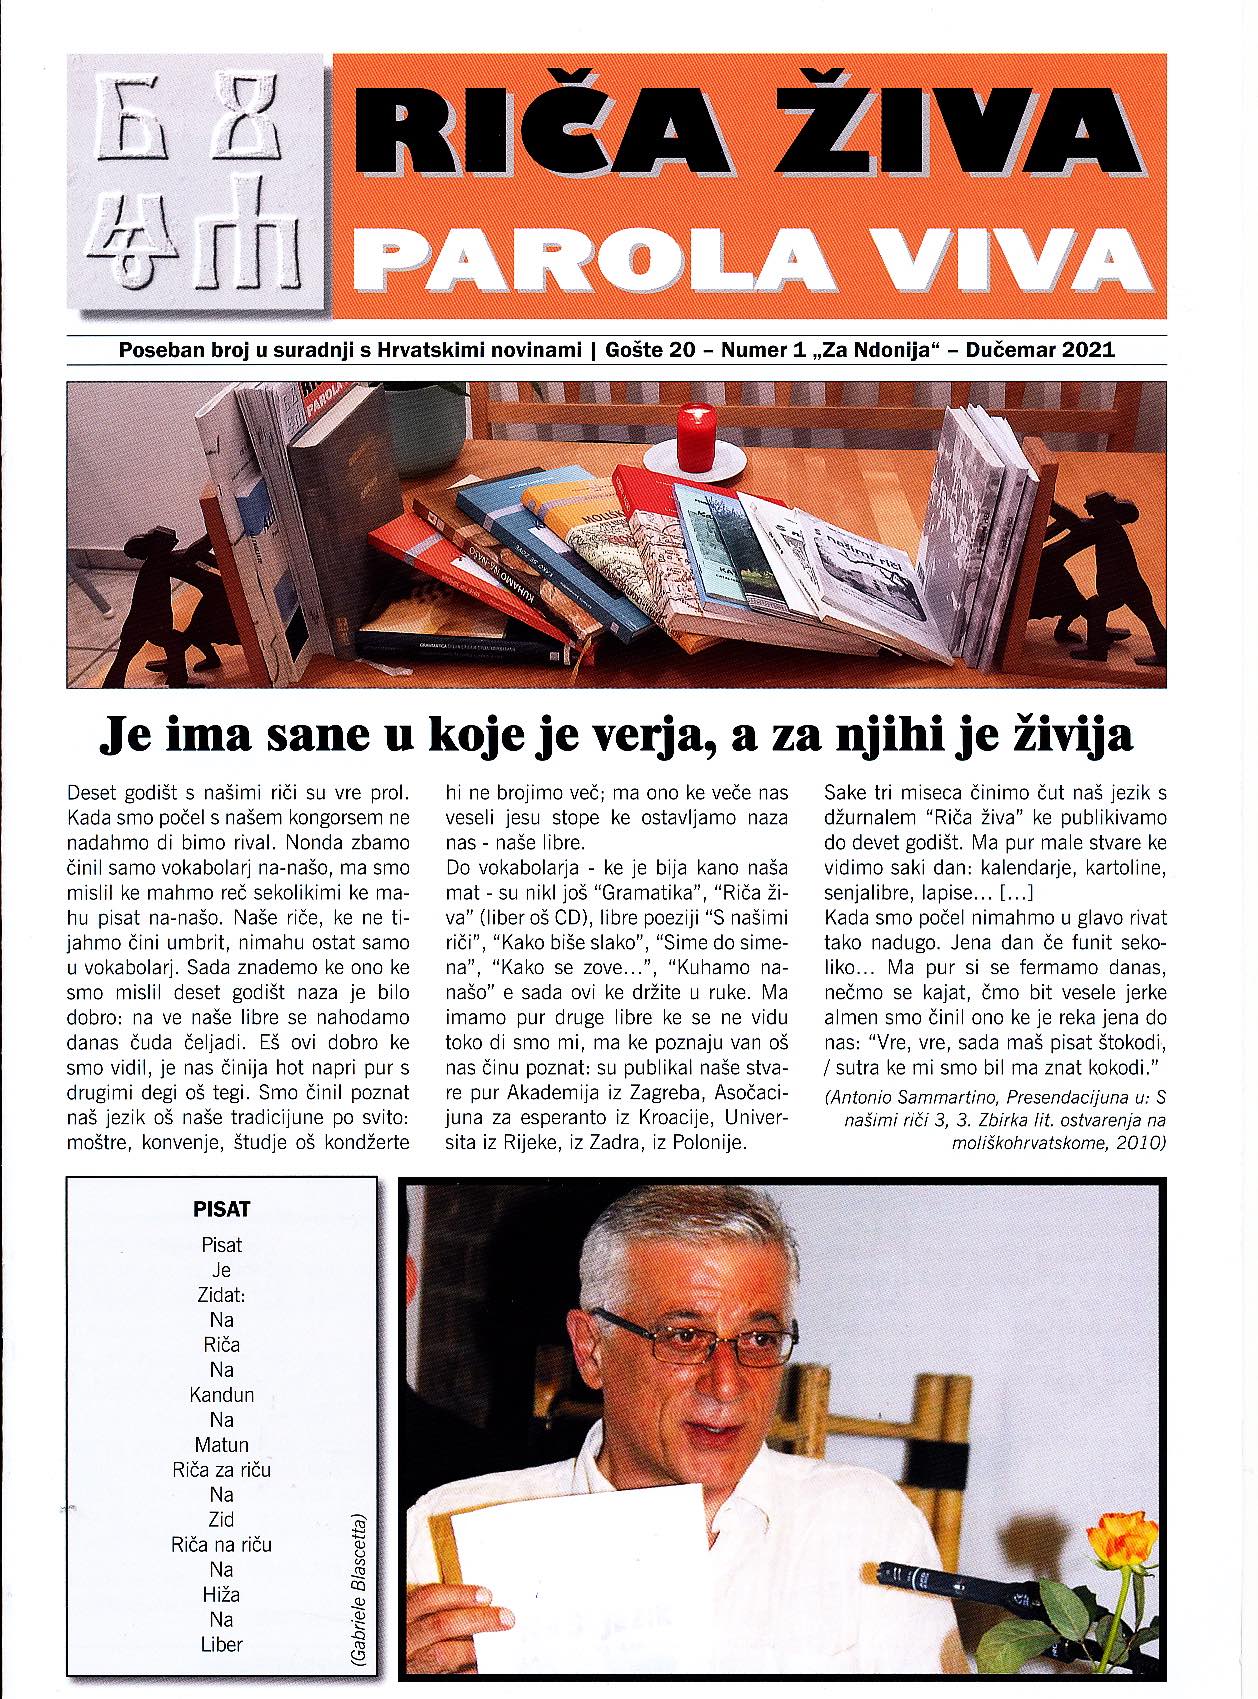 Riča Živa - Parola Viva eine Hommage an Antonio Sammartino 